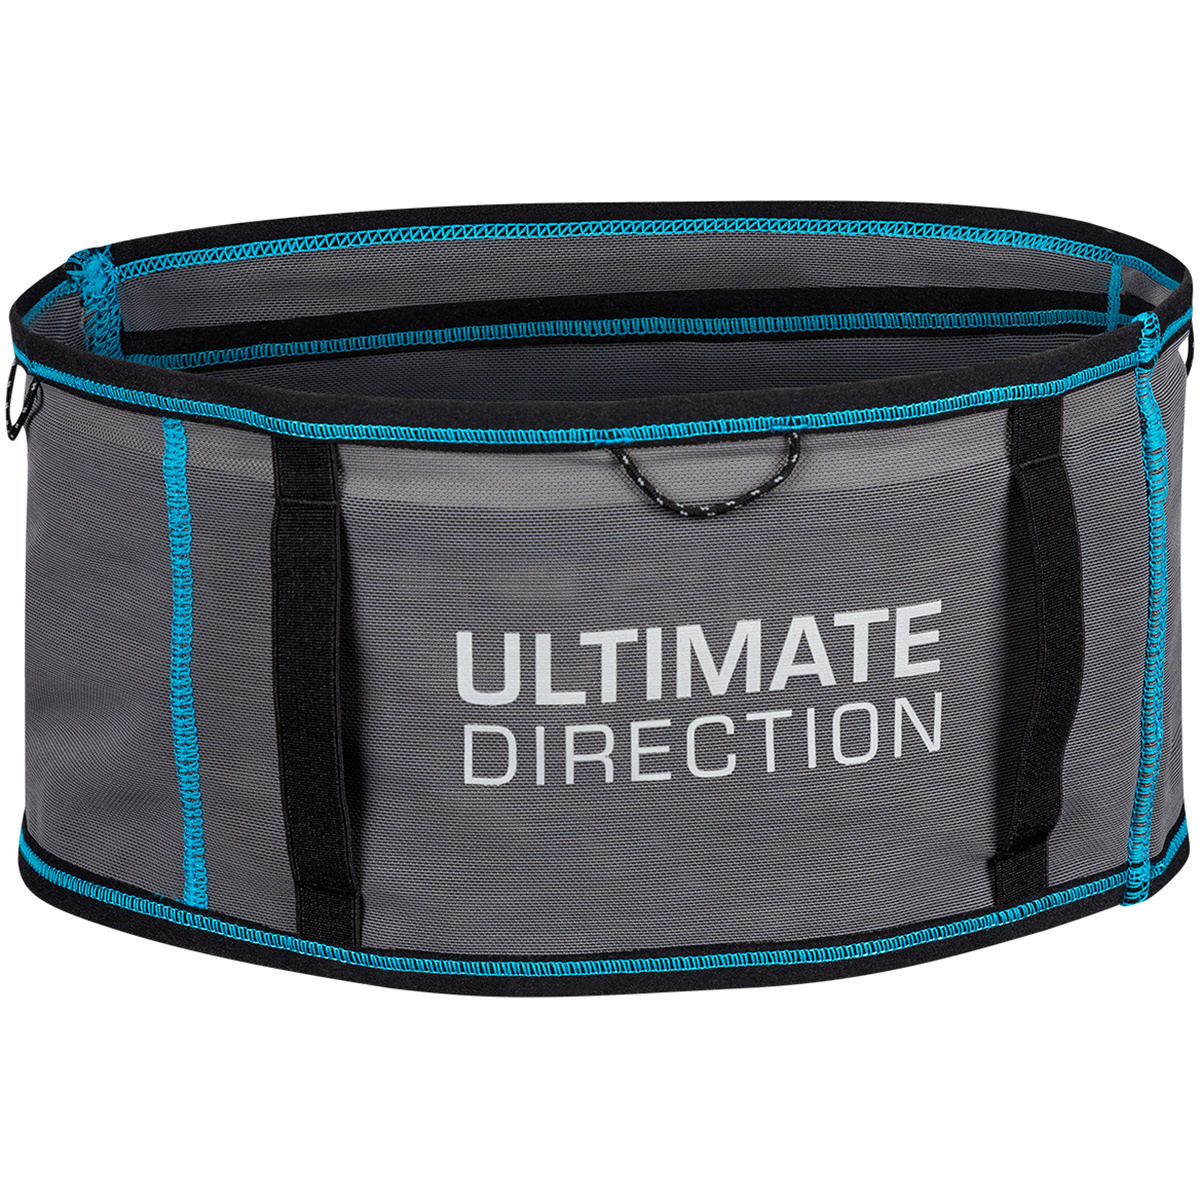 Ultimate Direction Utility Hüfttasche (Größe M, grau)